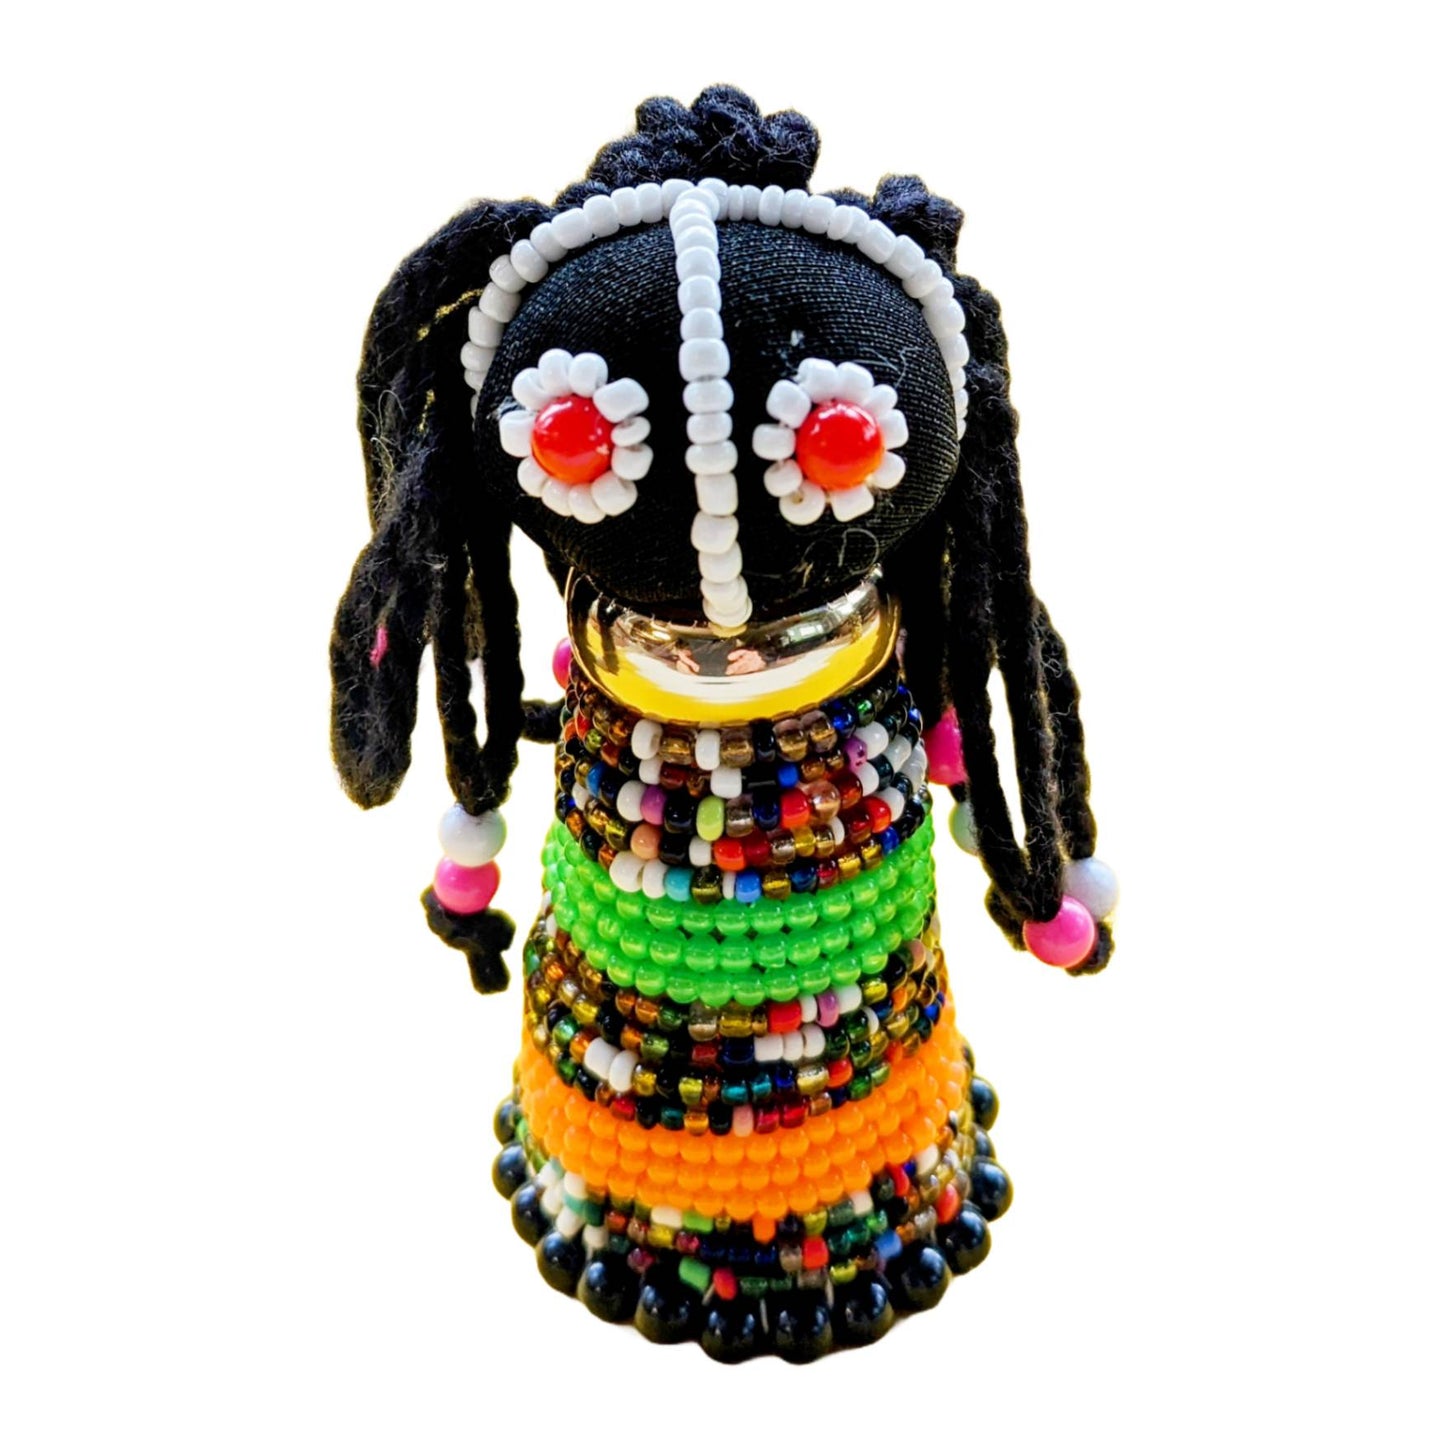 Ndebele Beaded "Sangoma" or Shaman Doll